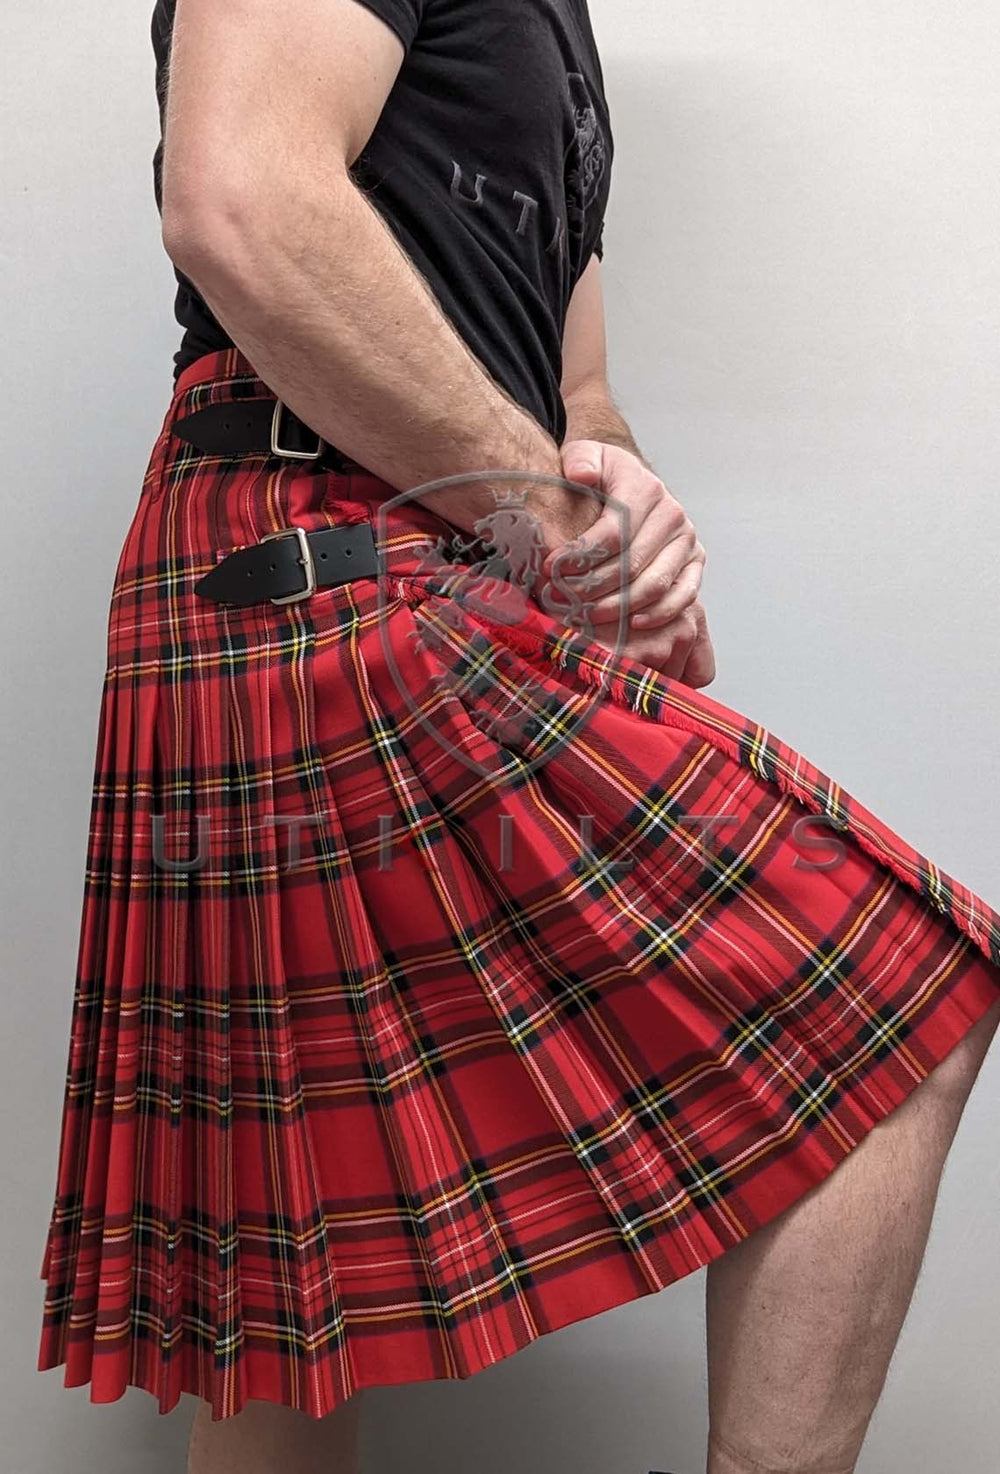 5 yard Made in Scotland Royal Stewart Polyviscose Tartan Kilt - Includes free Military Style Safety Kilt Pin